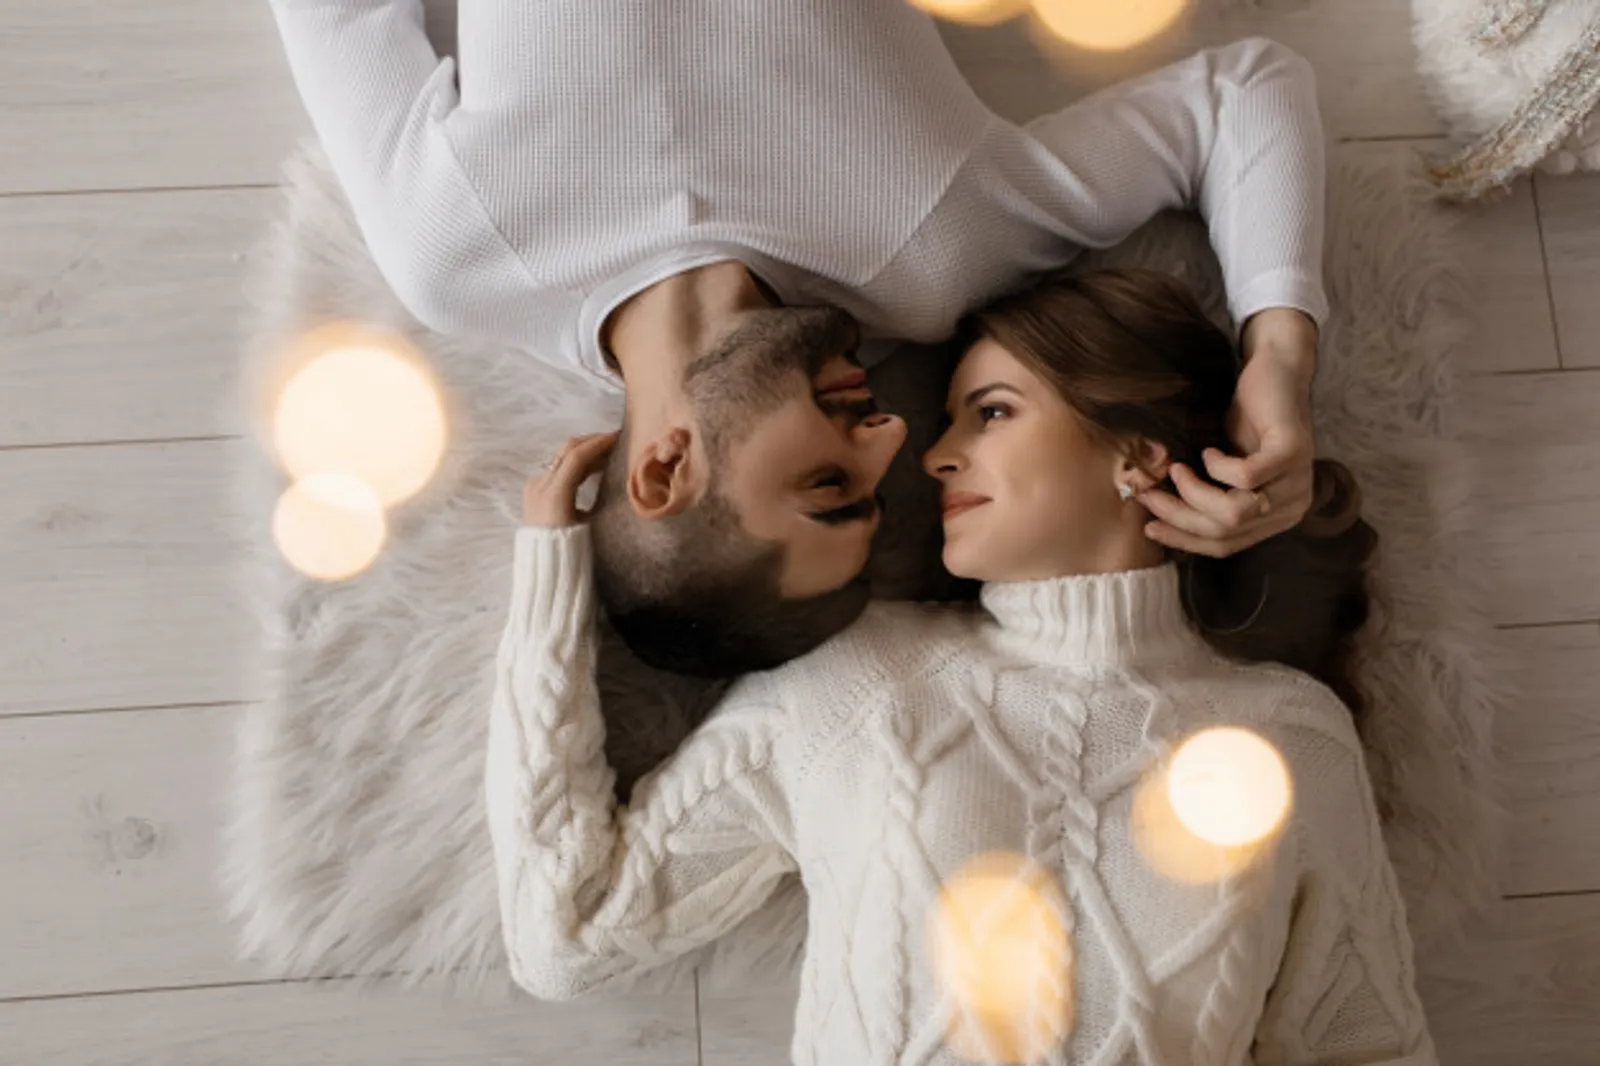 Nggak Cepat Keluar, Ini 7 Cara Agar Suami Tahan Lama di Ranjang